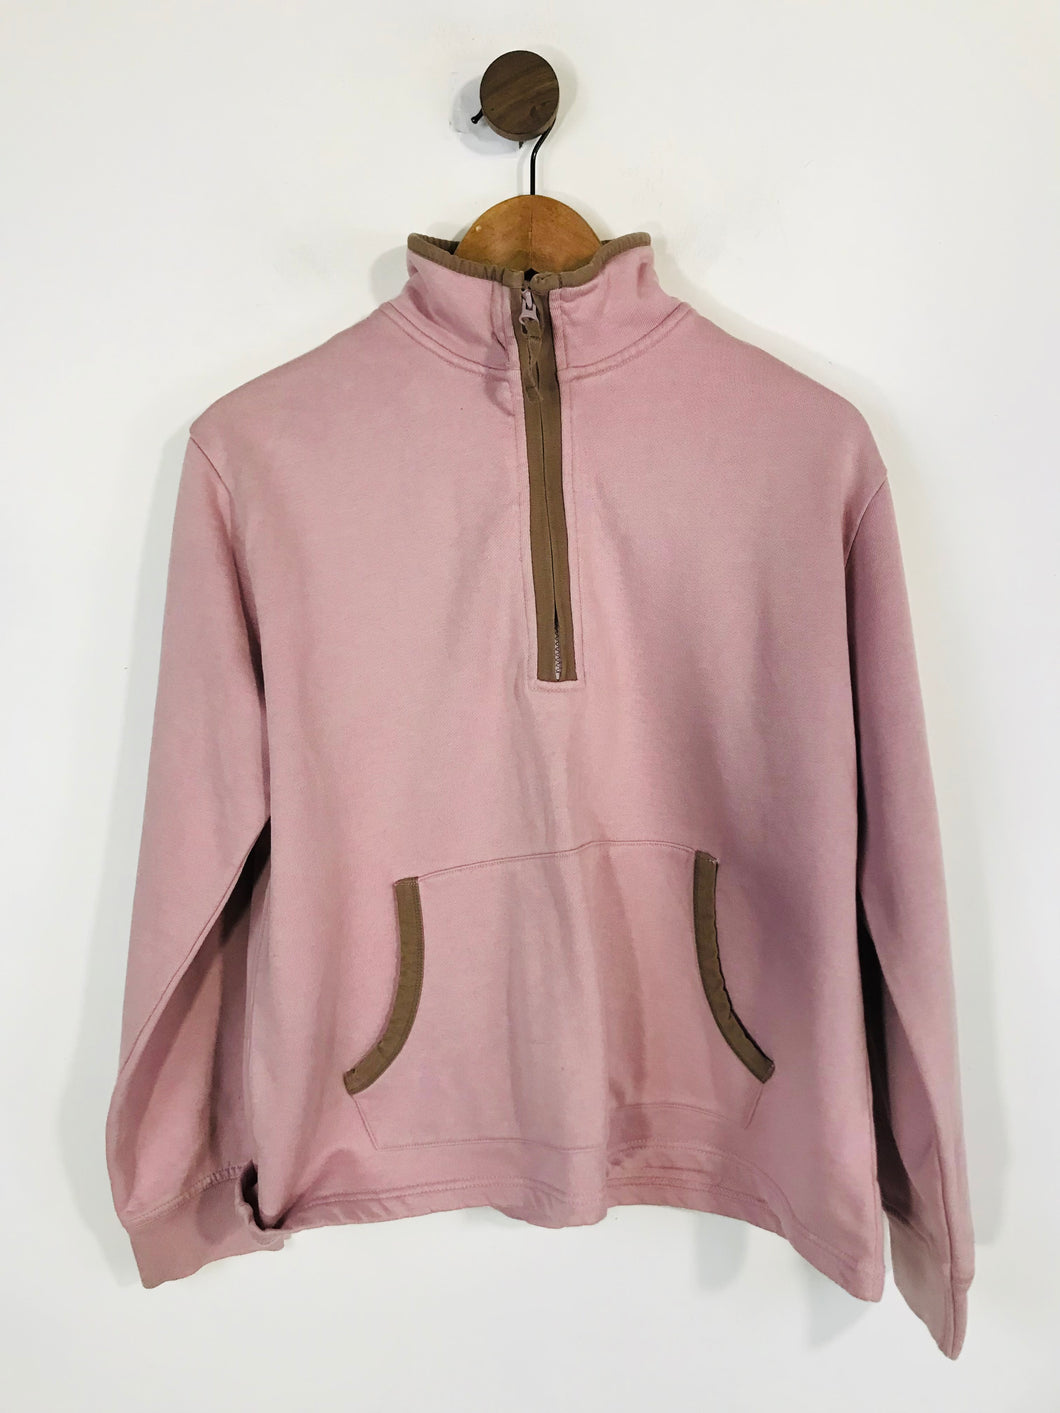 Boden Women's Cotton High Neck Sweatshirt | M UK10-12 | Pink